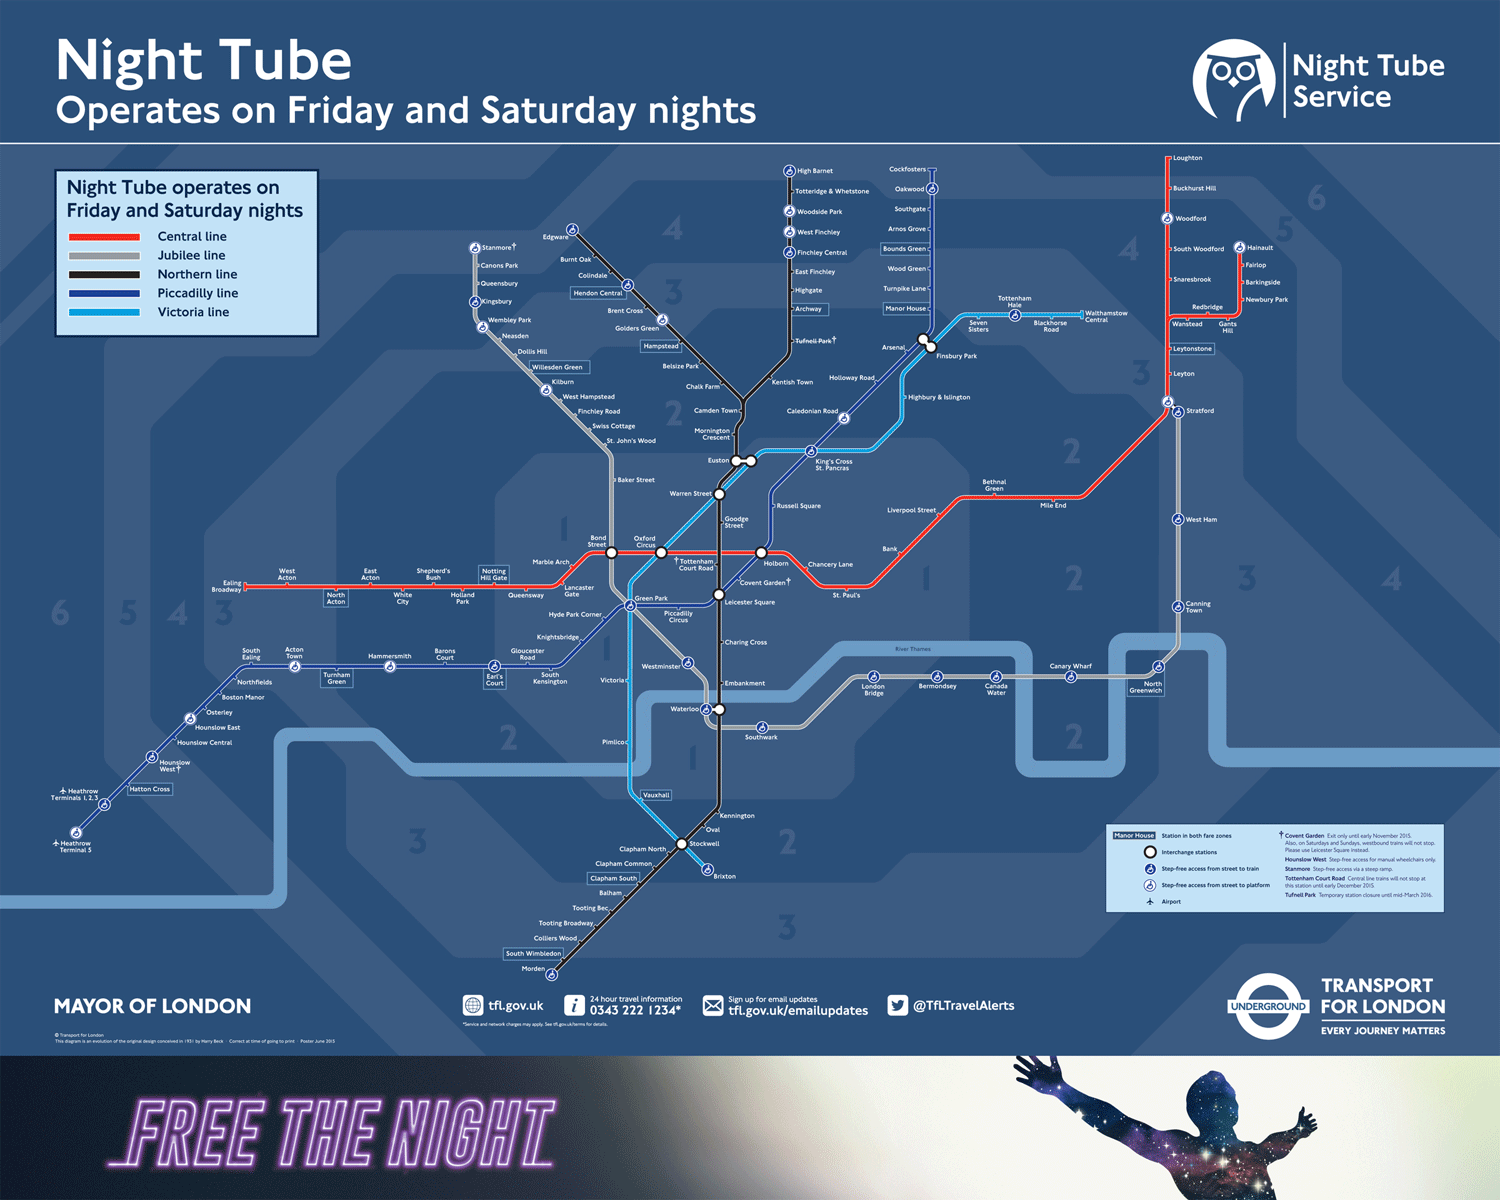 Night tube